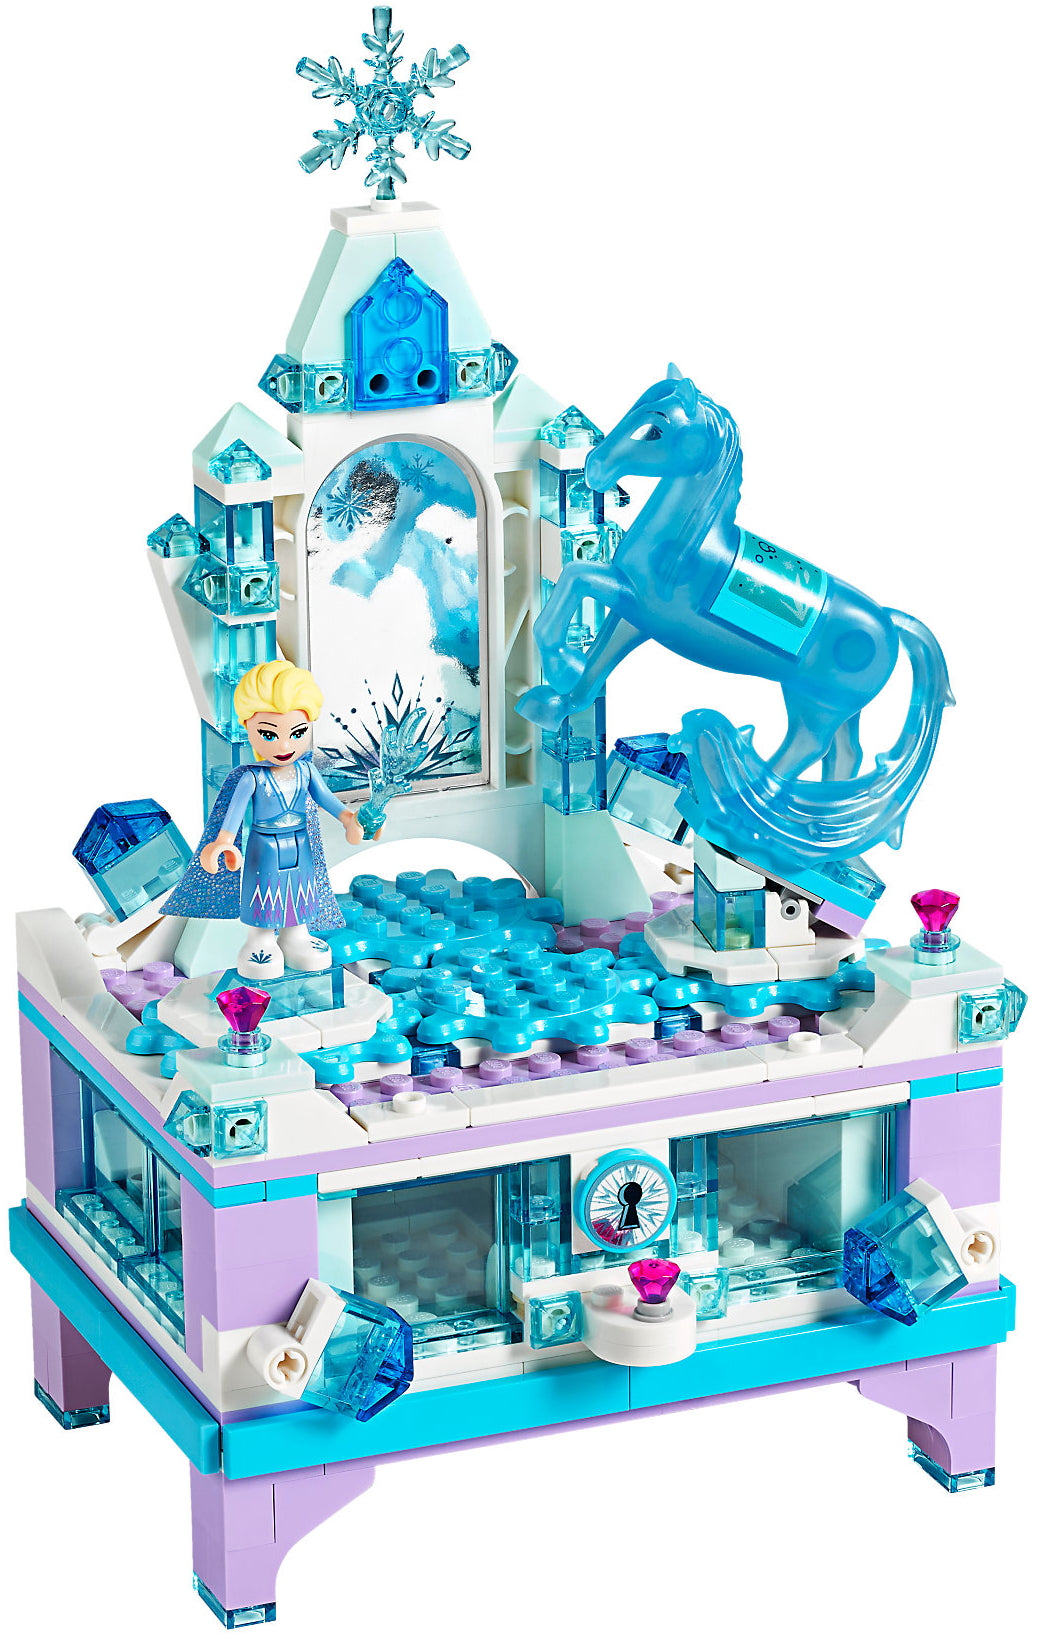 LEGO Disney Frozen II: Elsa’s Jewelry Box Creation Building Set - 41168